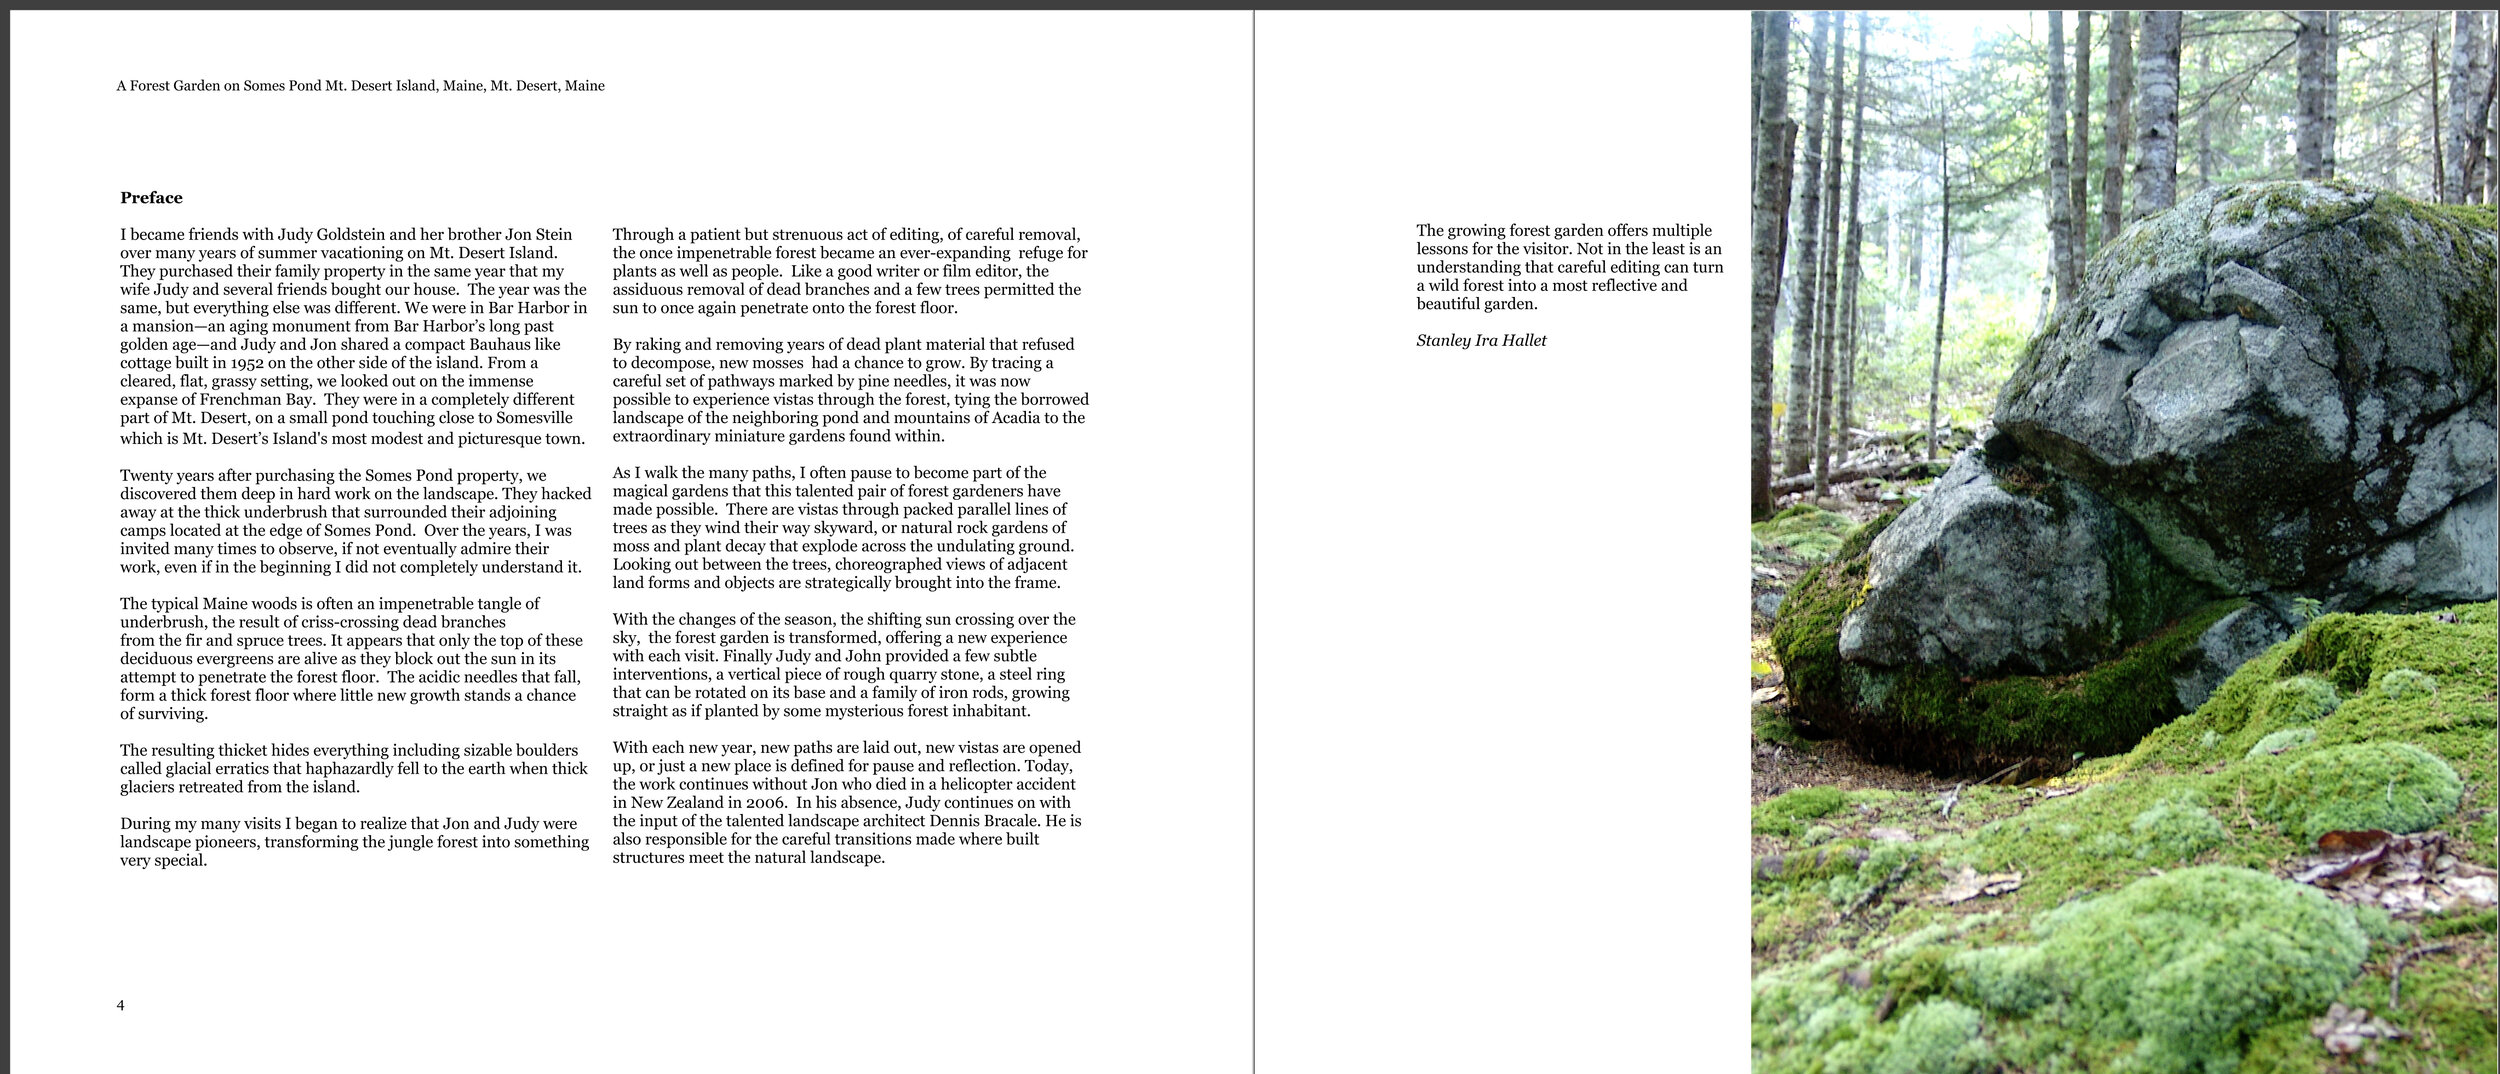 3 forest Garden Preface.jpg